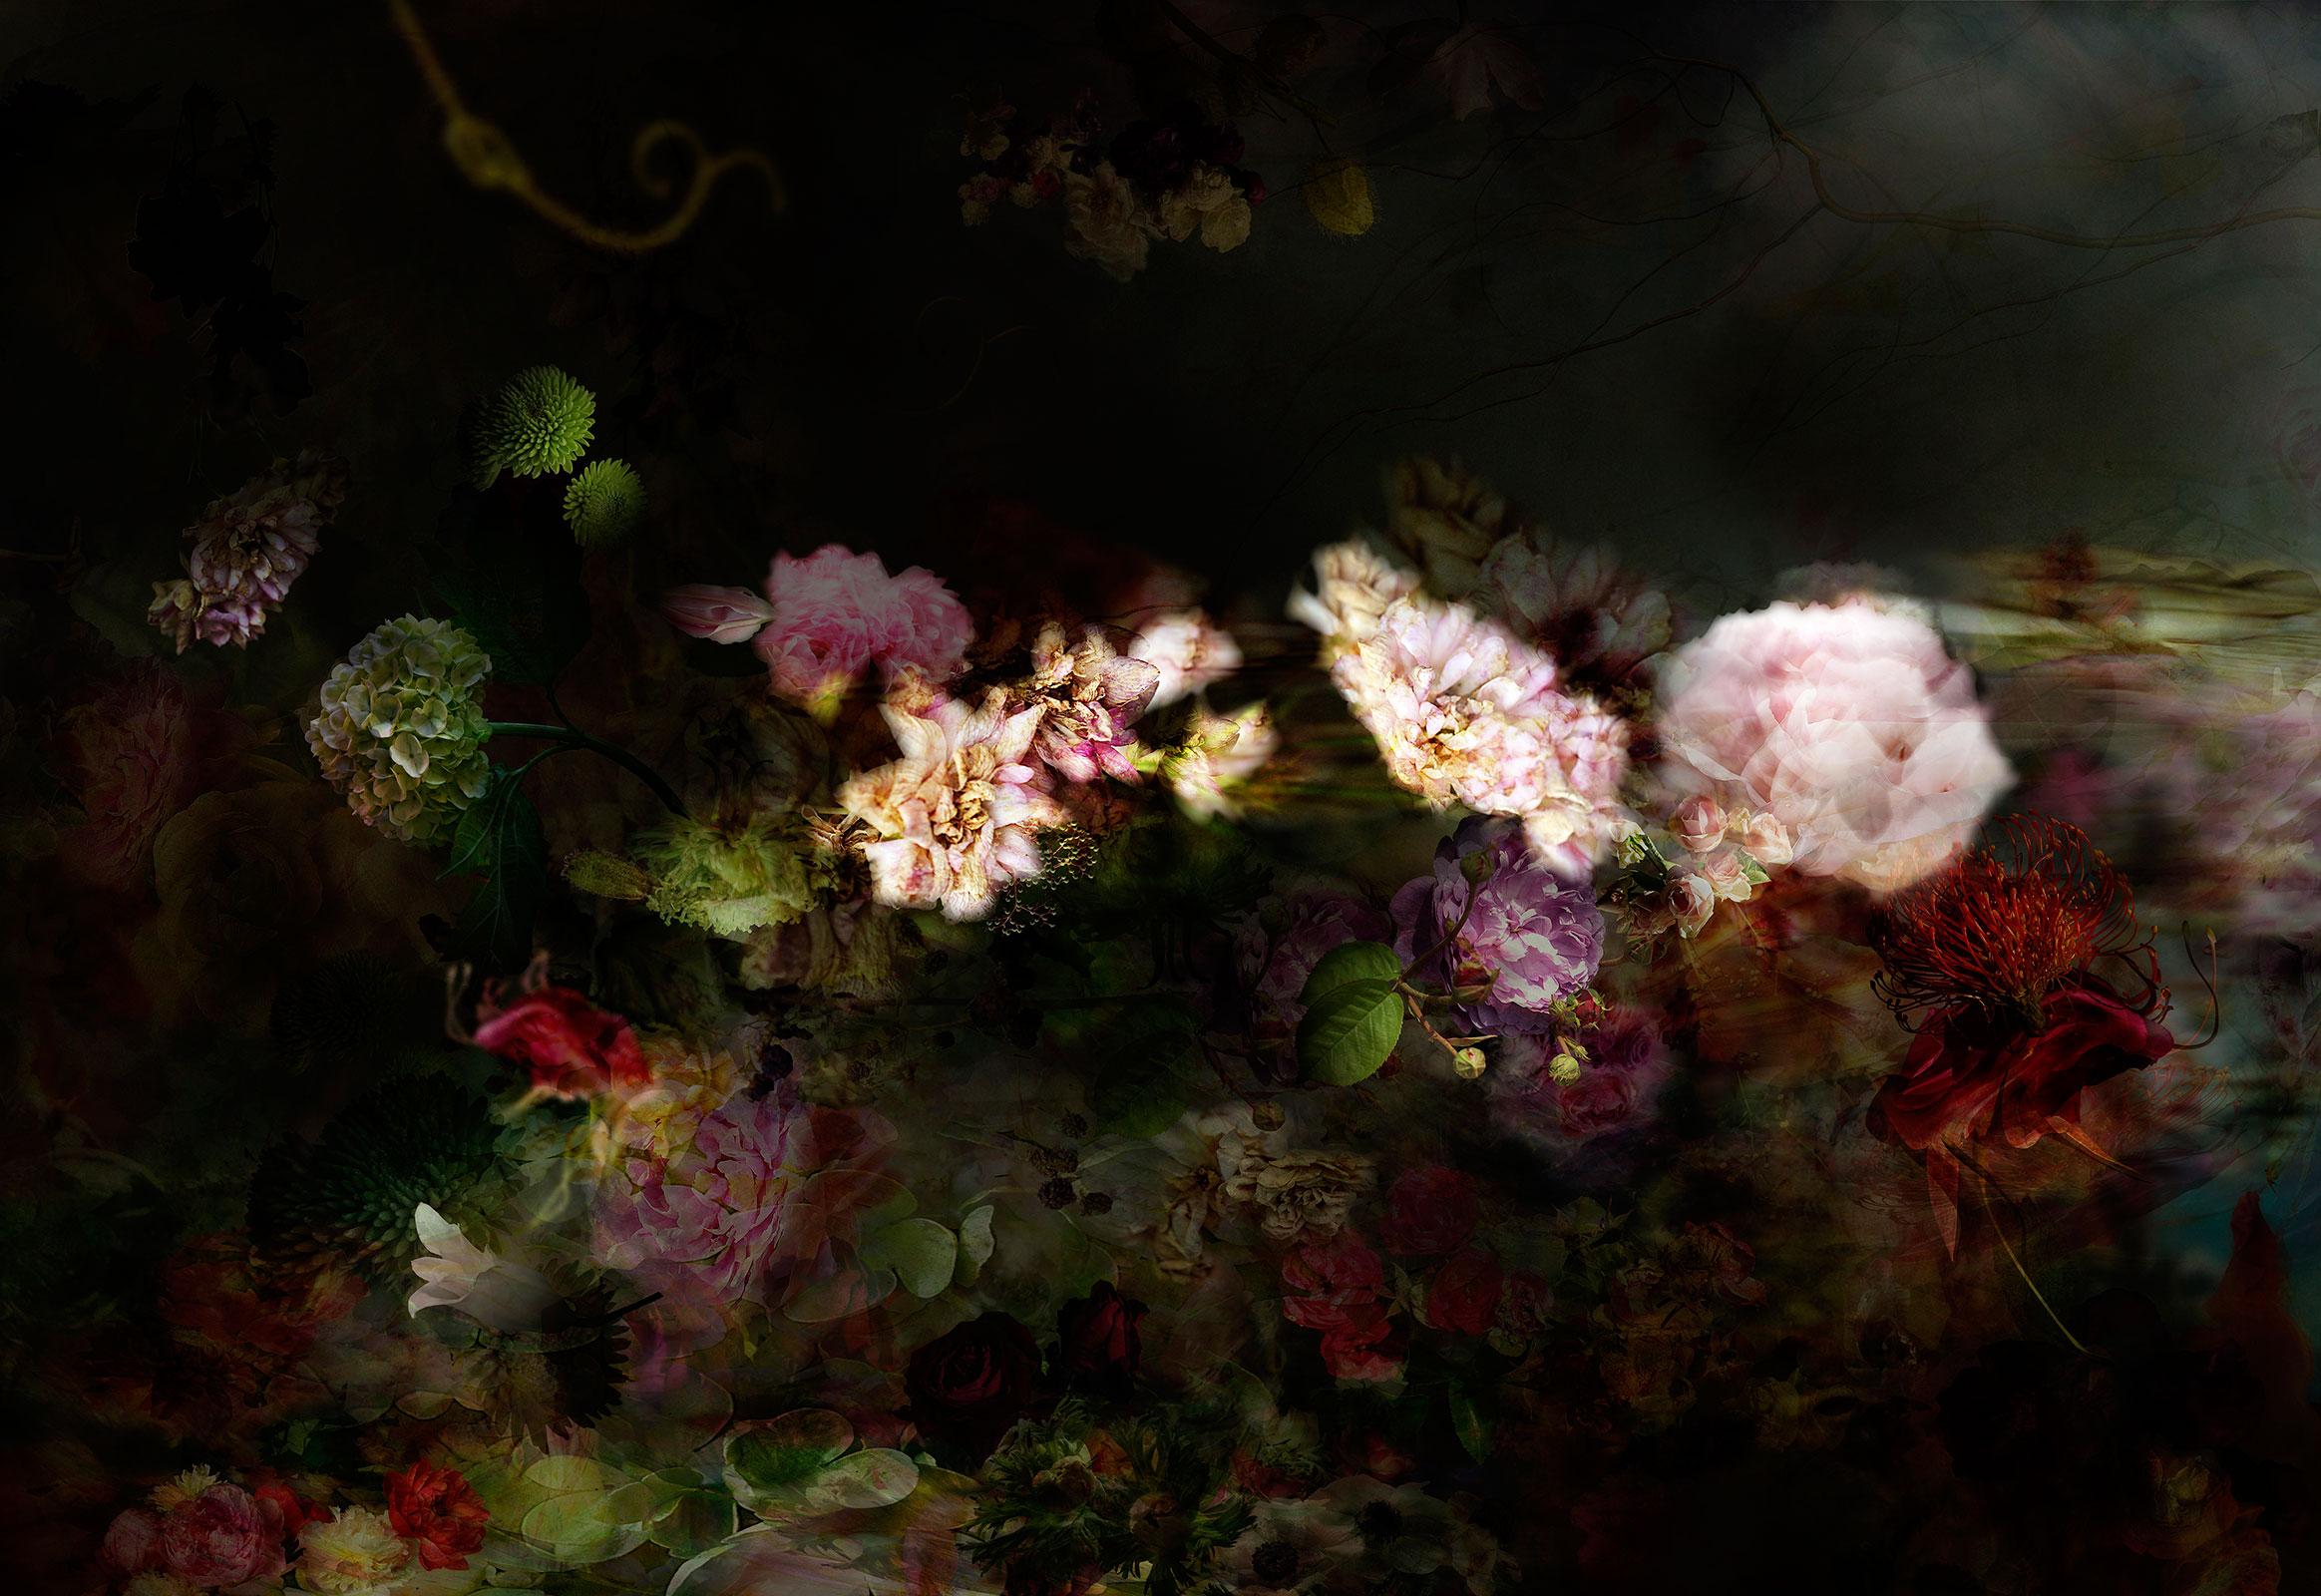 Isabelle Menin Still-Life Photograph - Solstice #4 - Floral still life dark abstract landscape contemporary photograph